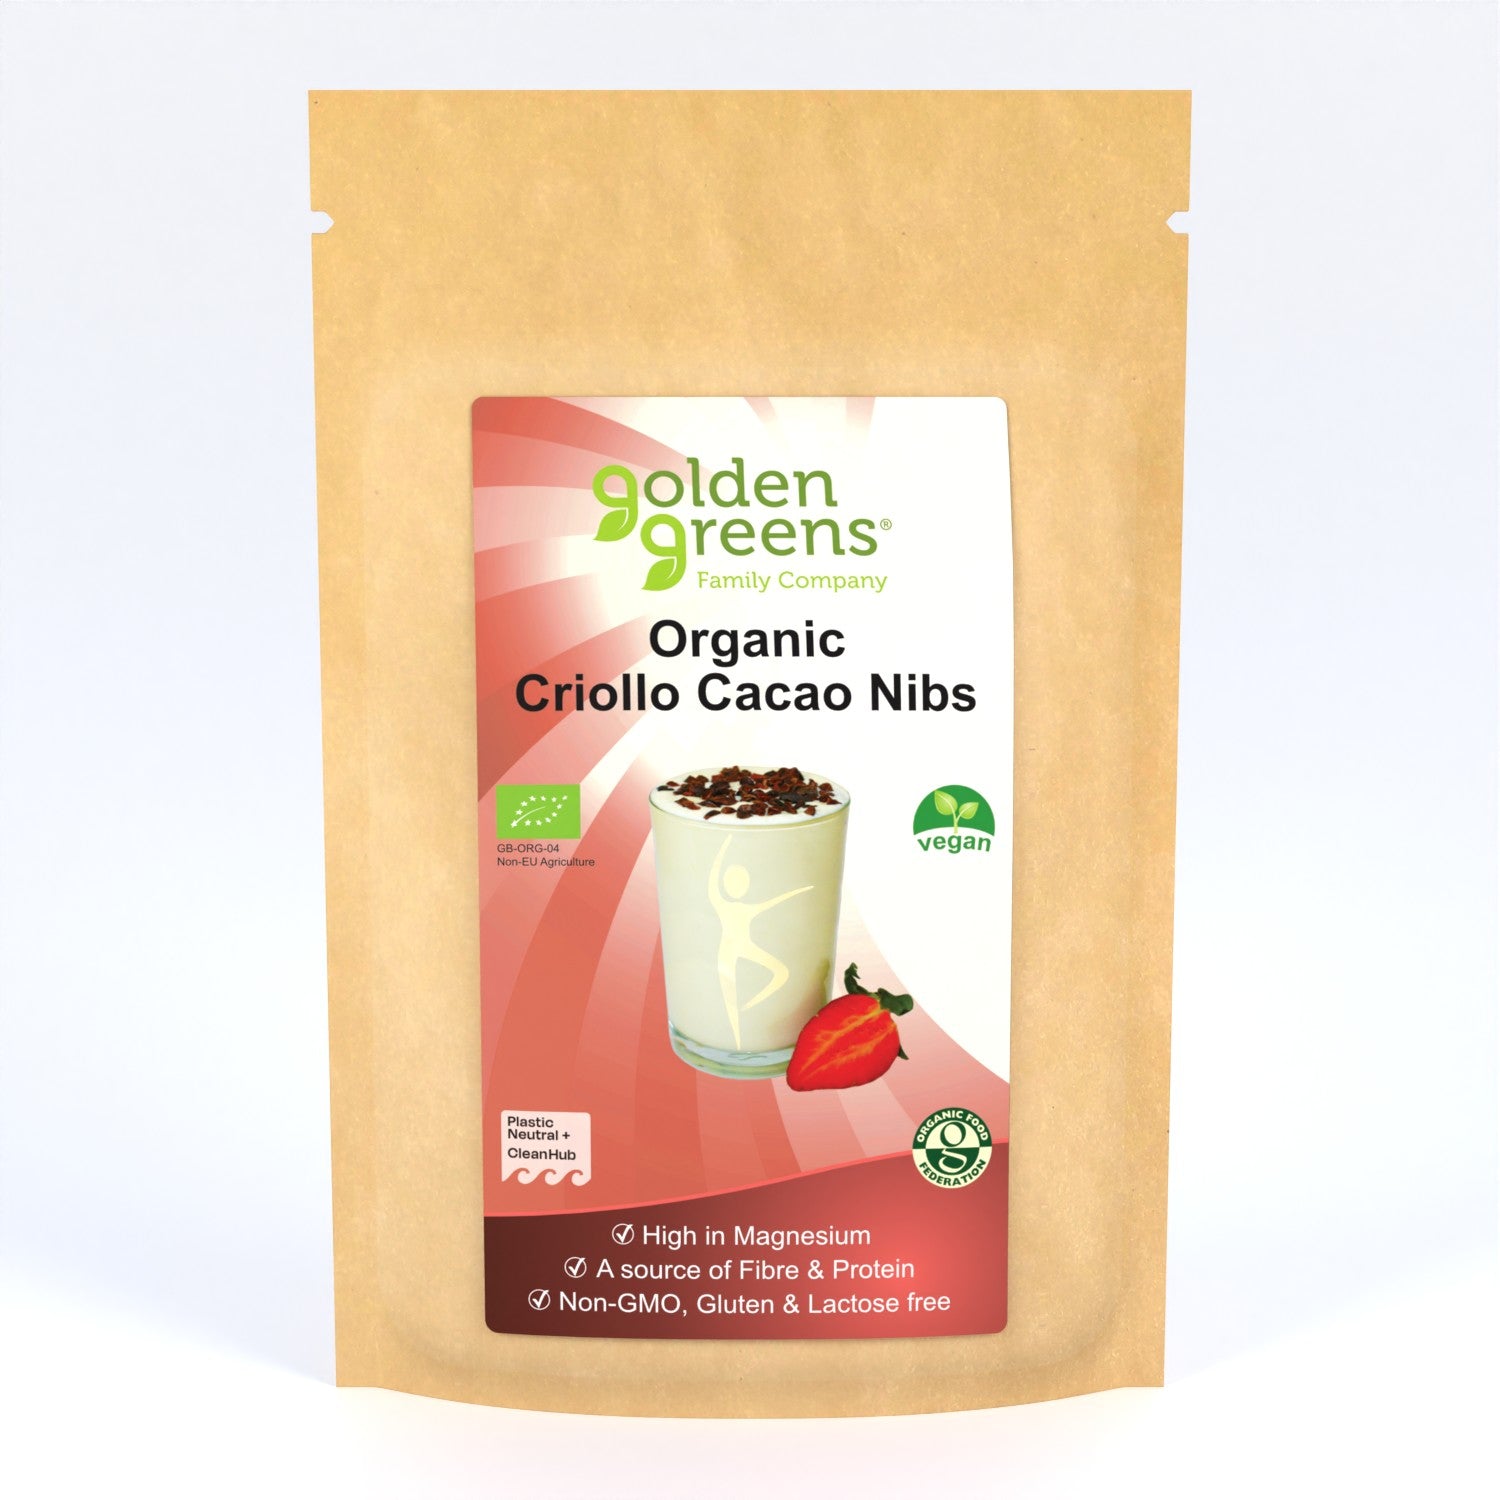 View Organic Criollo Cacao Nibs information